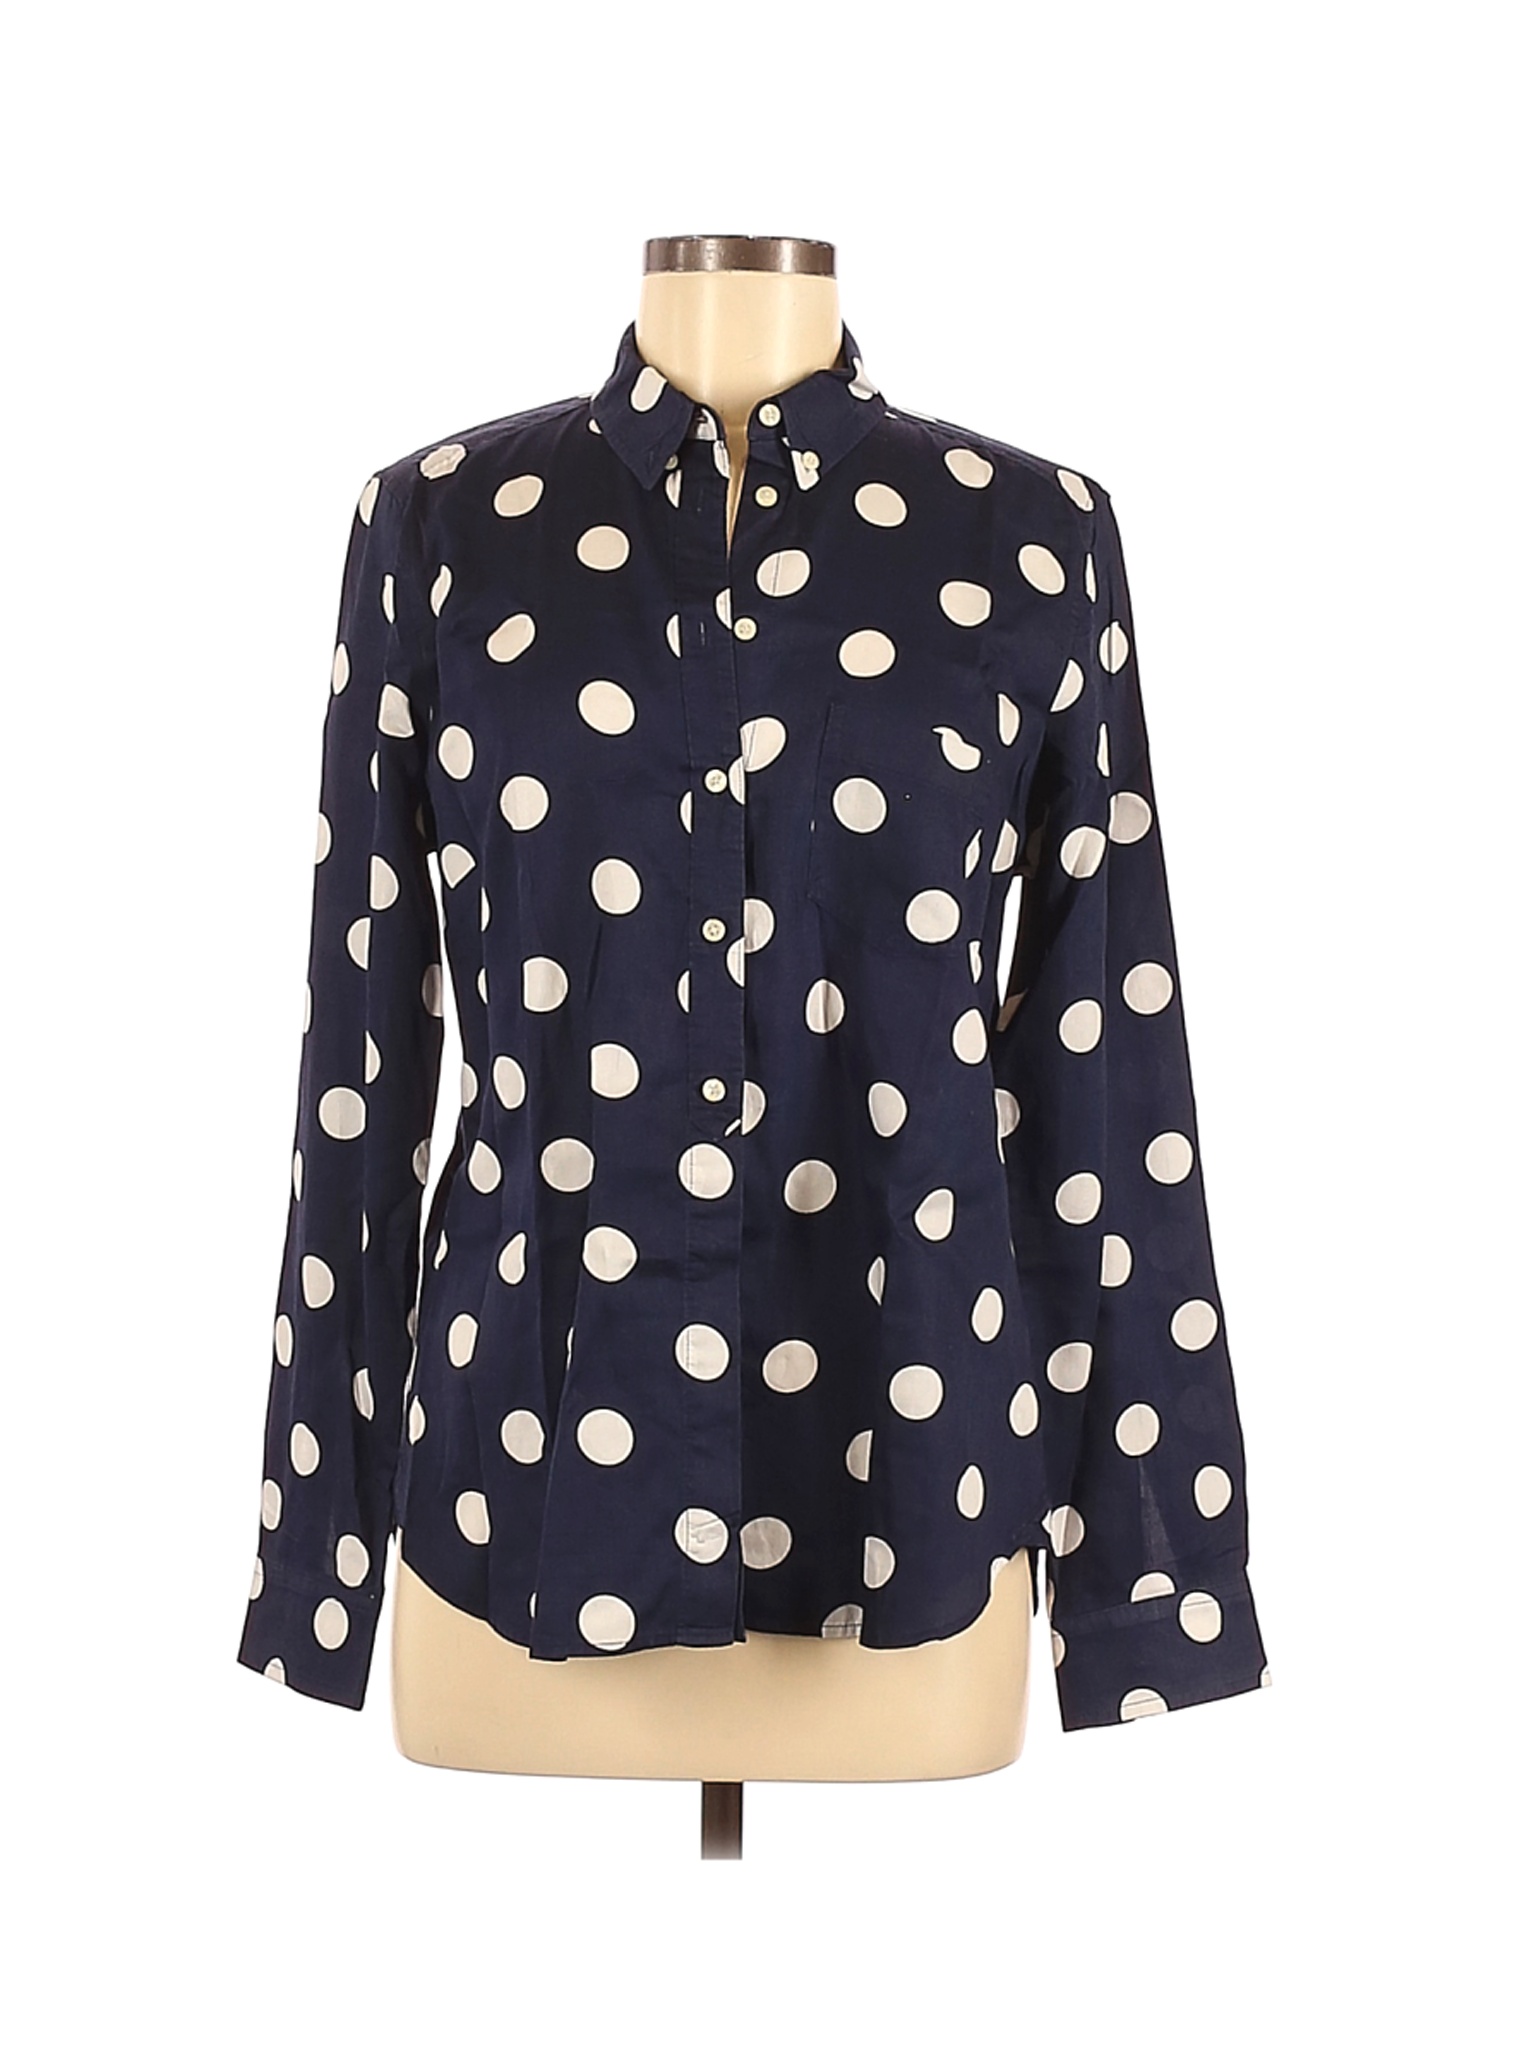 Gap Women Black Long Sleeve Button-Down Shirt M | eBay